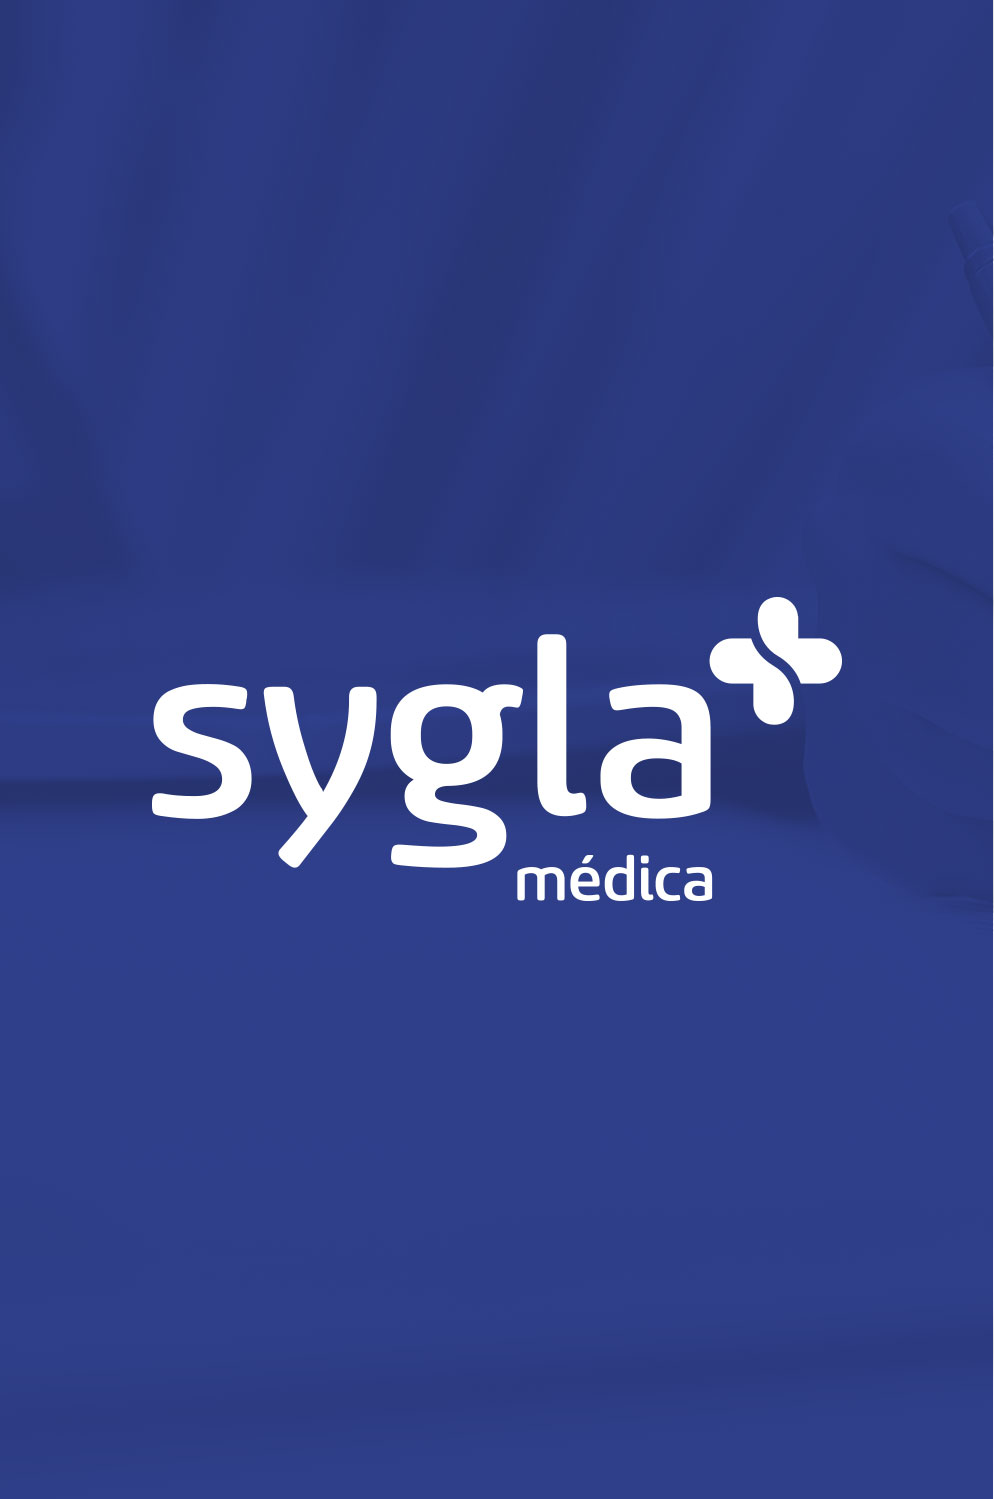 sygla-press8-logo1